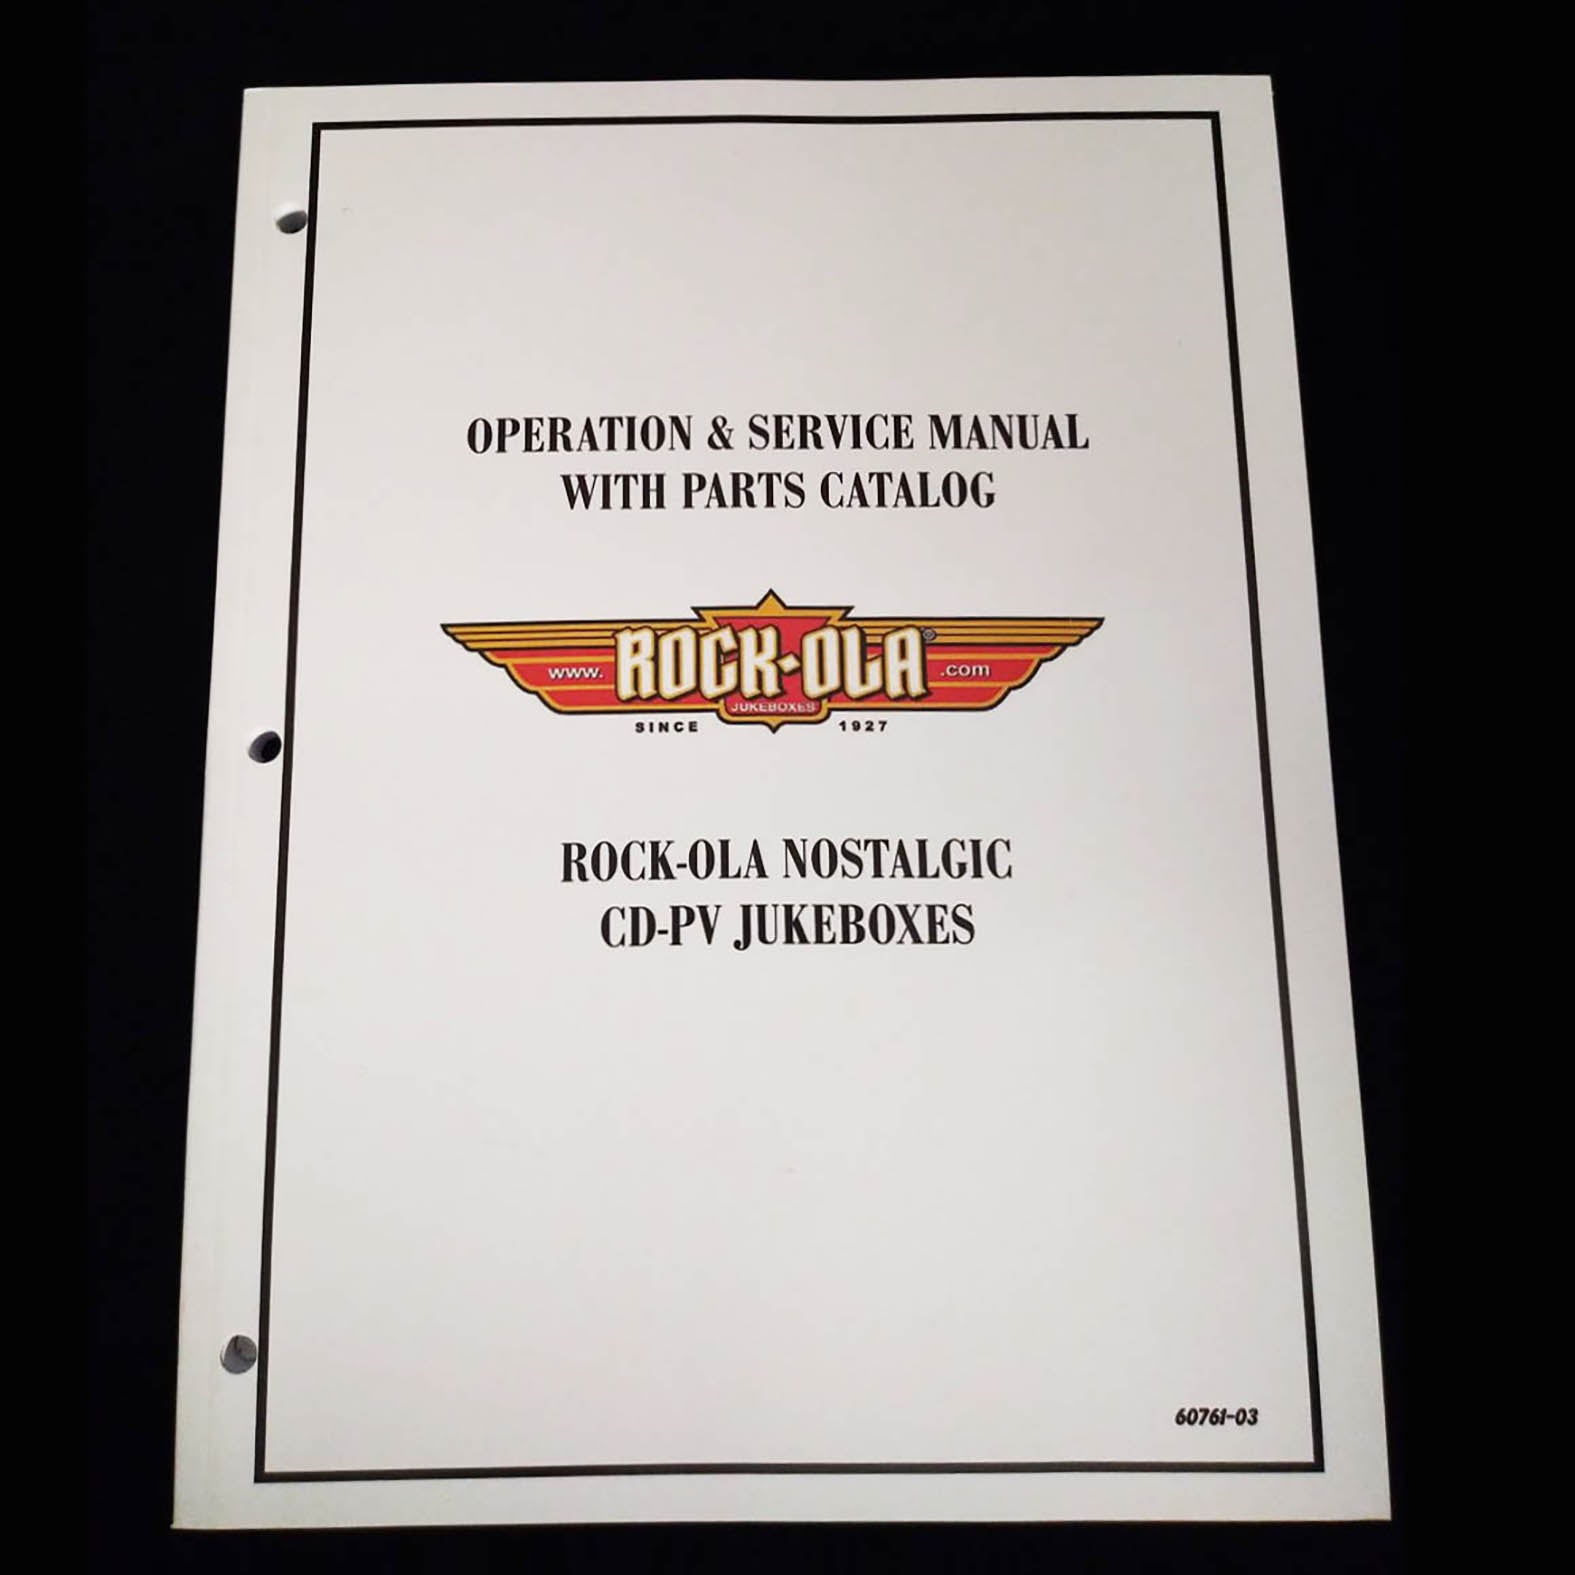 Operation & Service Manual - Rock-Ola Nostalgic CD-PV jukeboxes (60761-03)